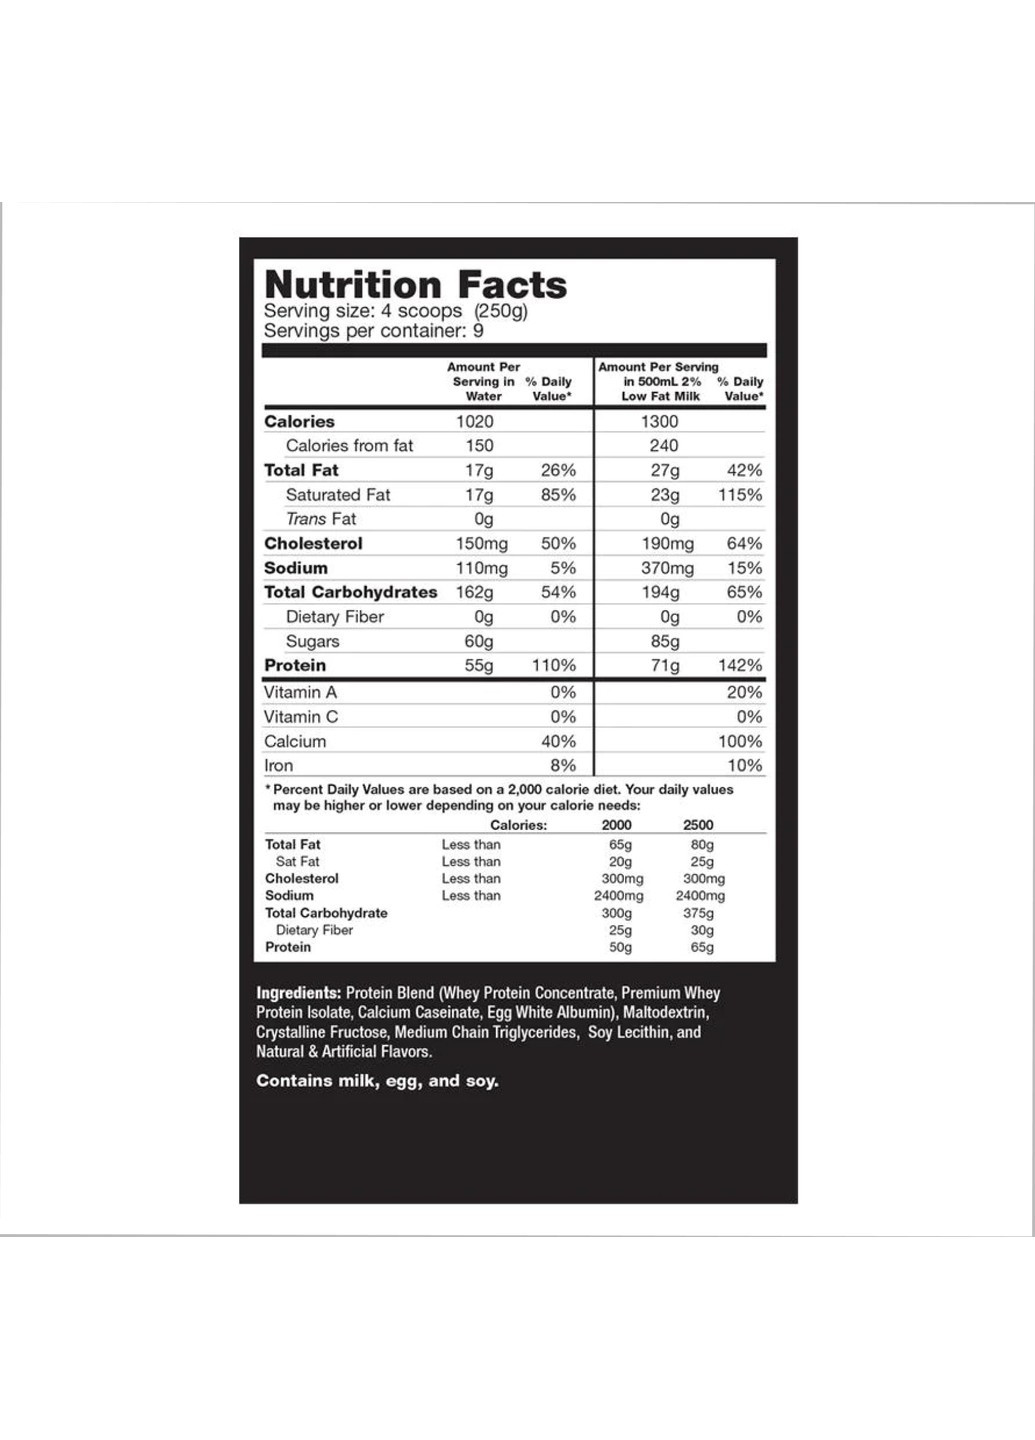 Высококалорийный Гейнер Muscle Juice 2544 – 4750г Ultimate Nutrition (270846095)